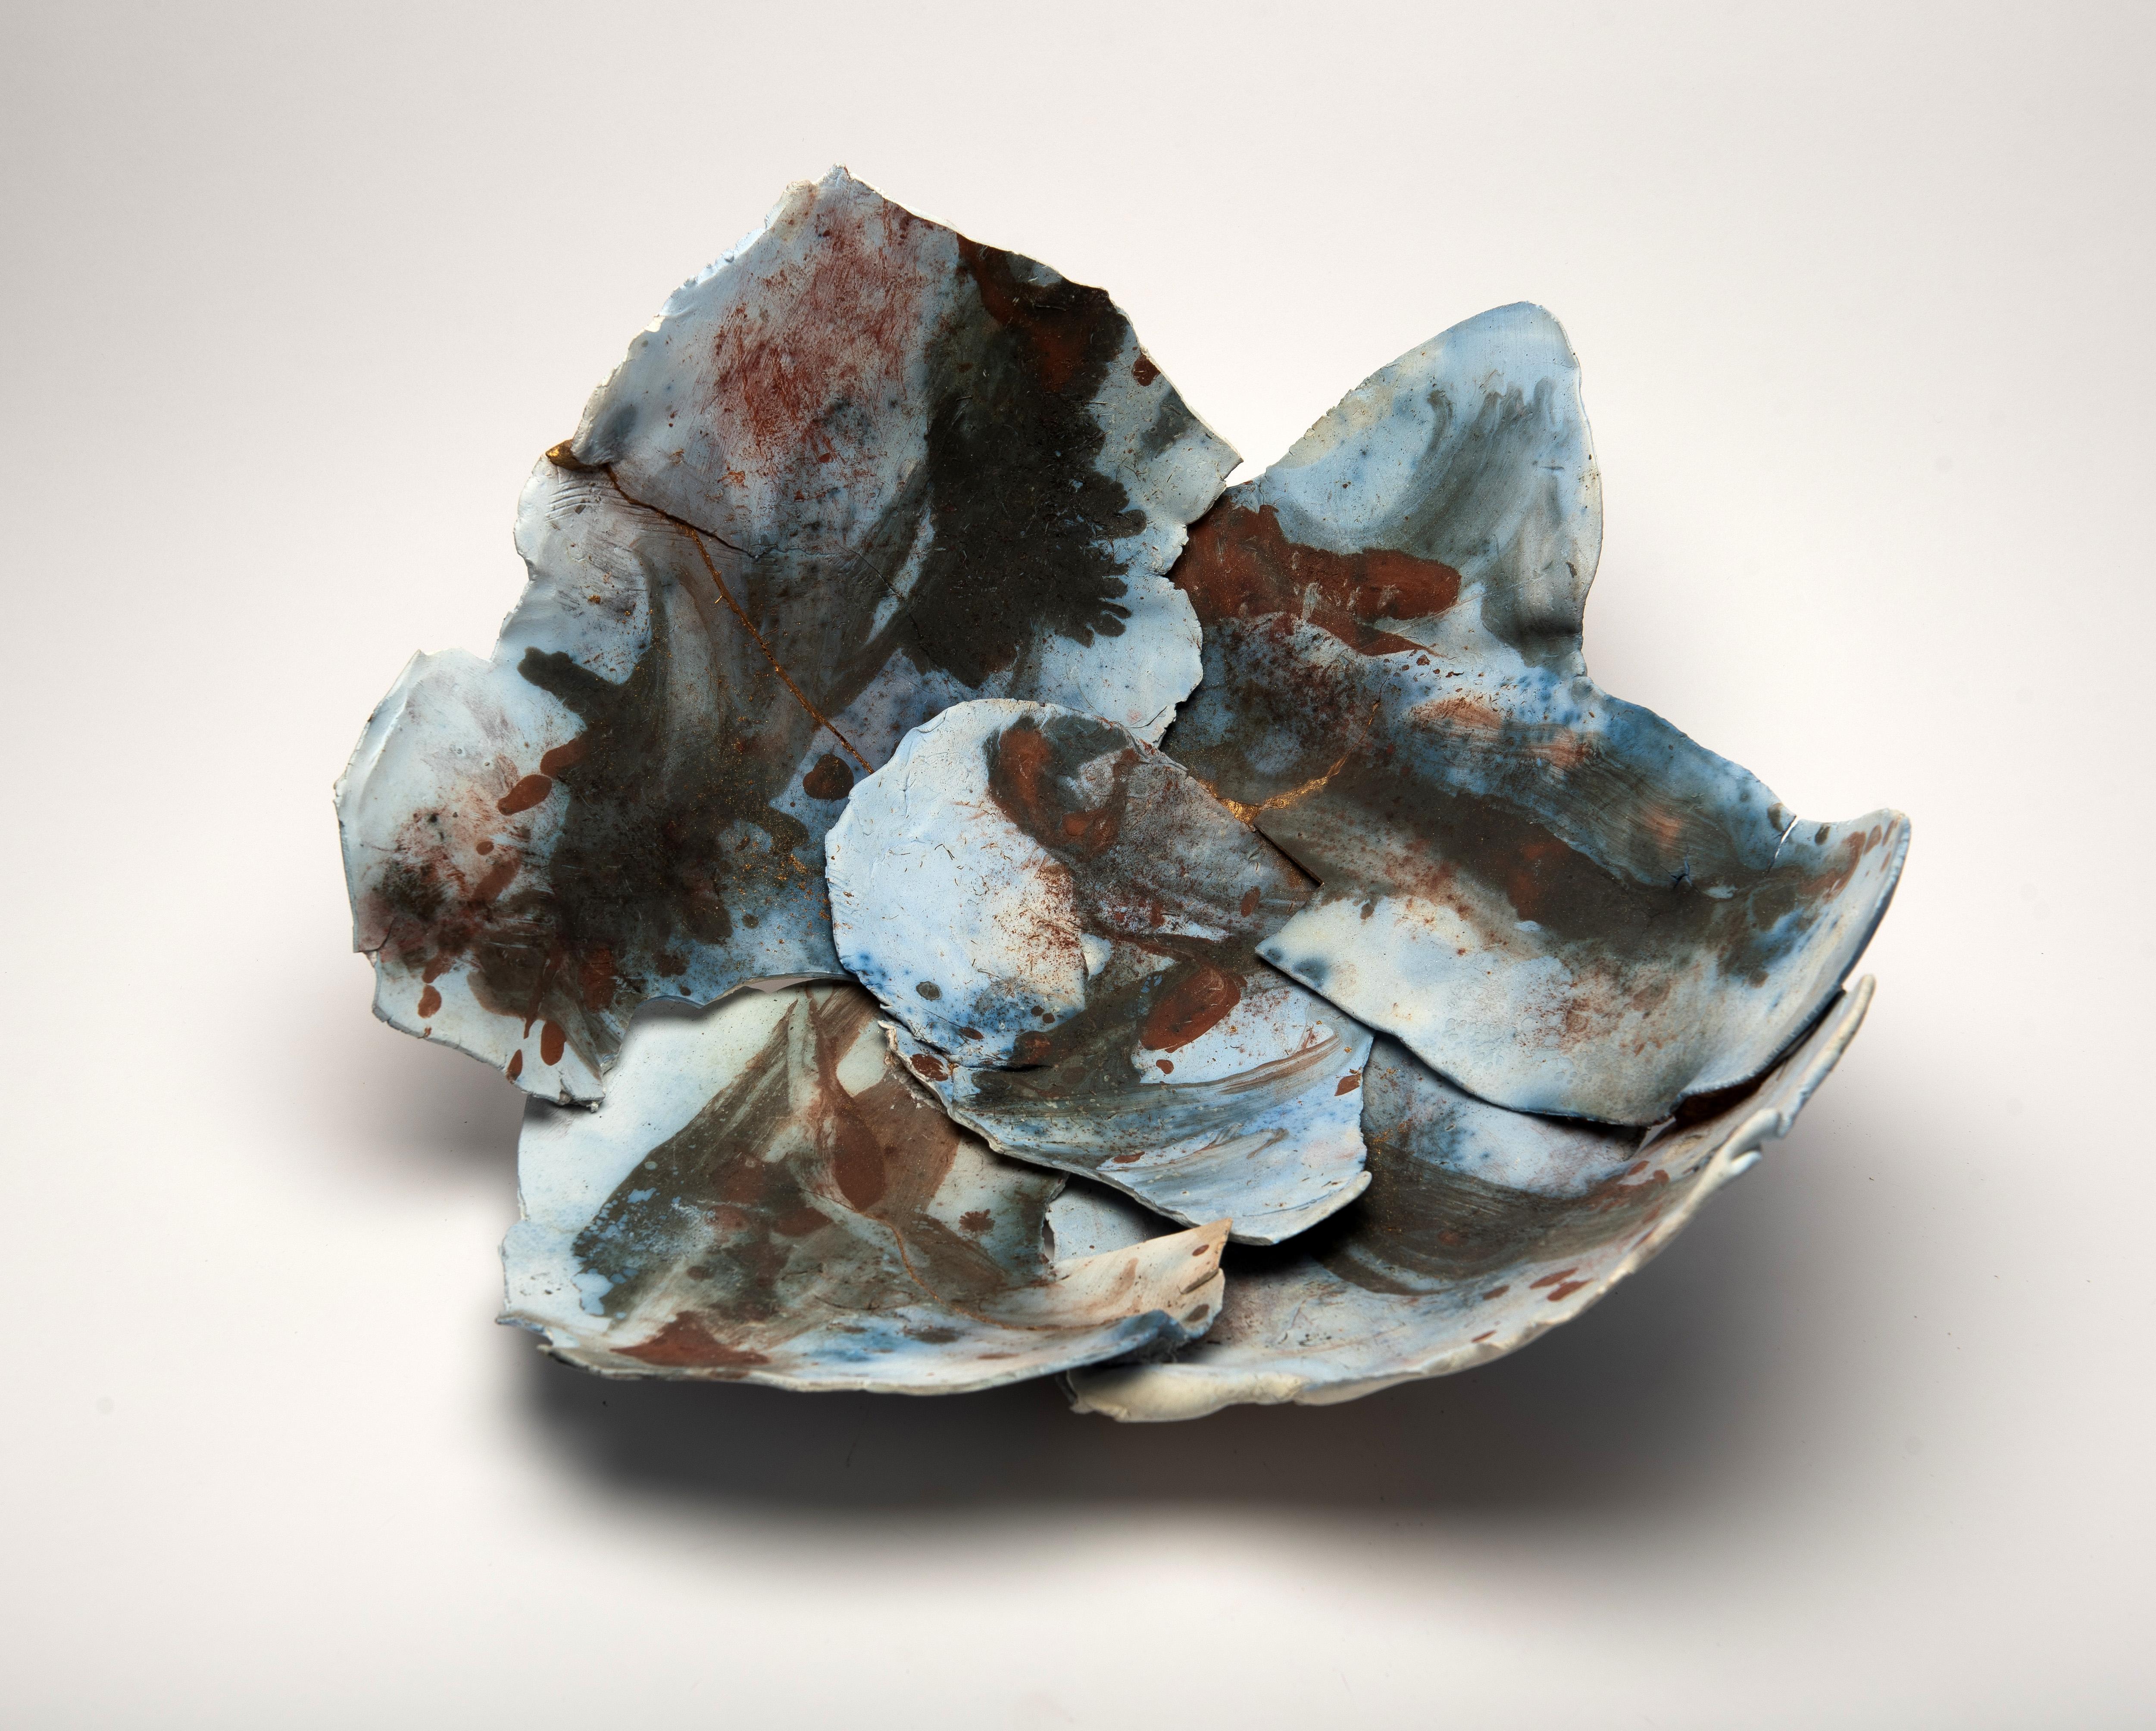 Alison Brannen Abstract Sculpture - "Approaching Storm", ceramic sculpture, porcelain shards, saggar, blue, copper